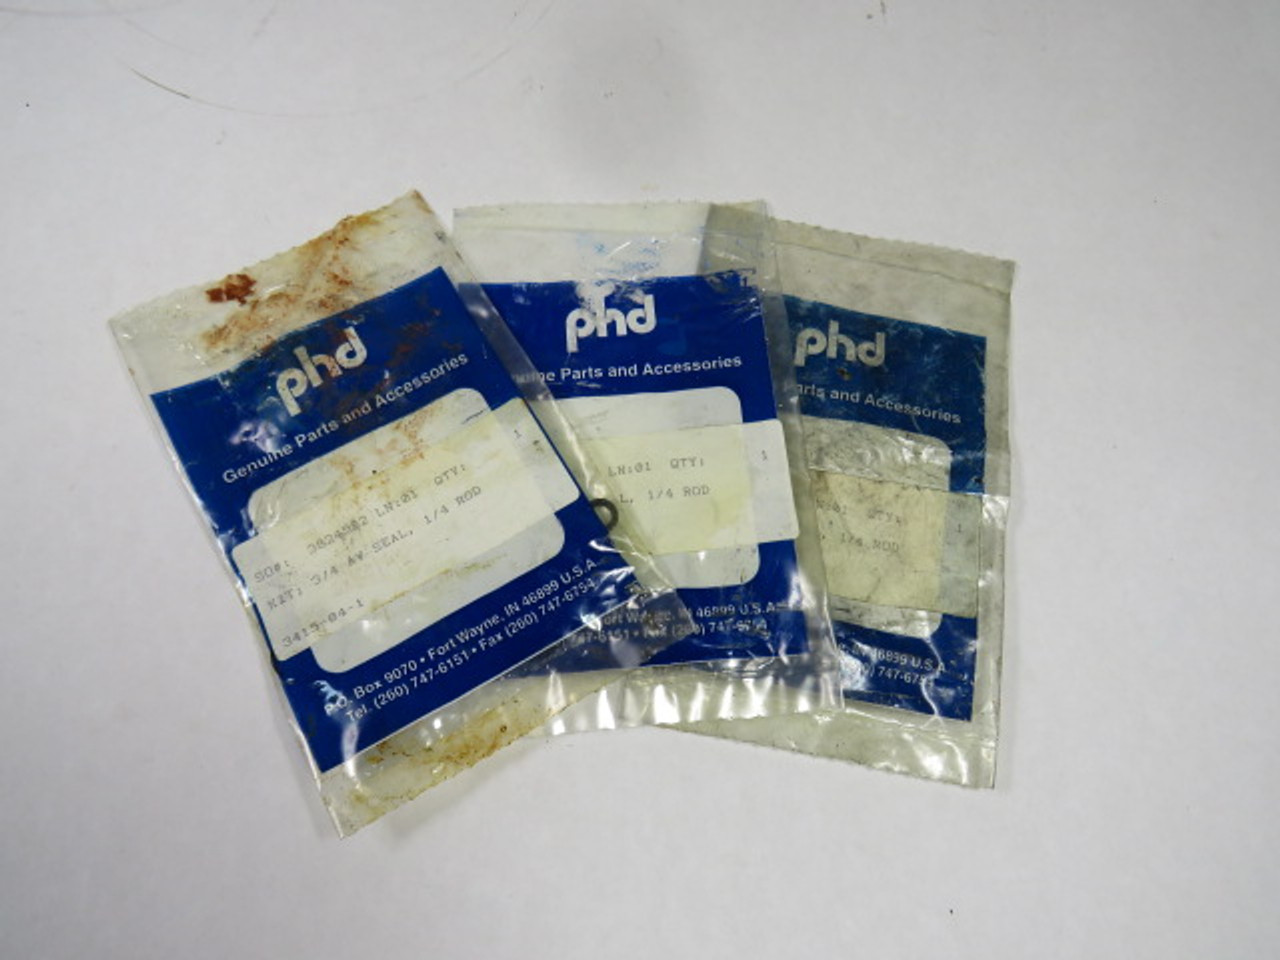 PHD 3415-04-1 3824582 Pneumatic Seal Repair Kit 3/4"AV Lot of 3 NWB